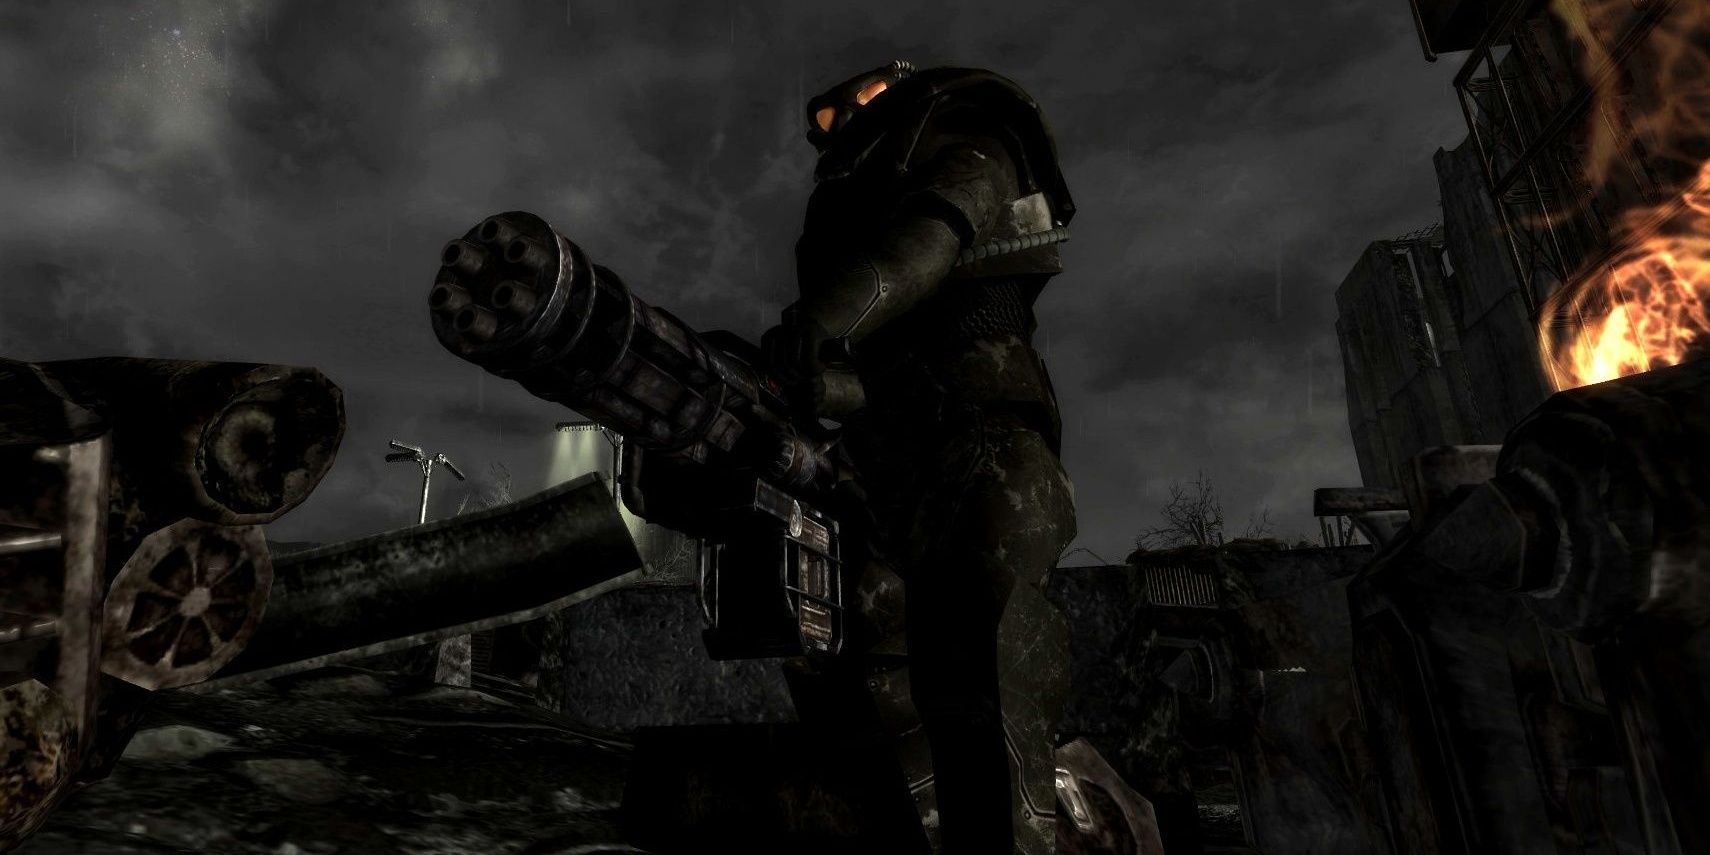 Power Armor & Minigun From Fallout 3